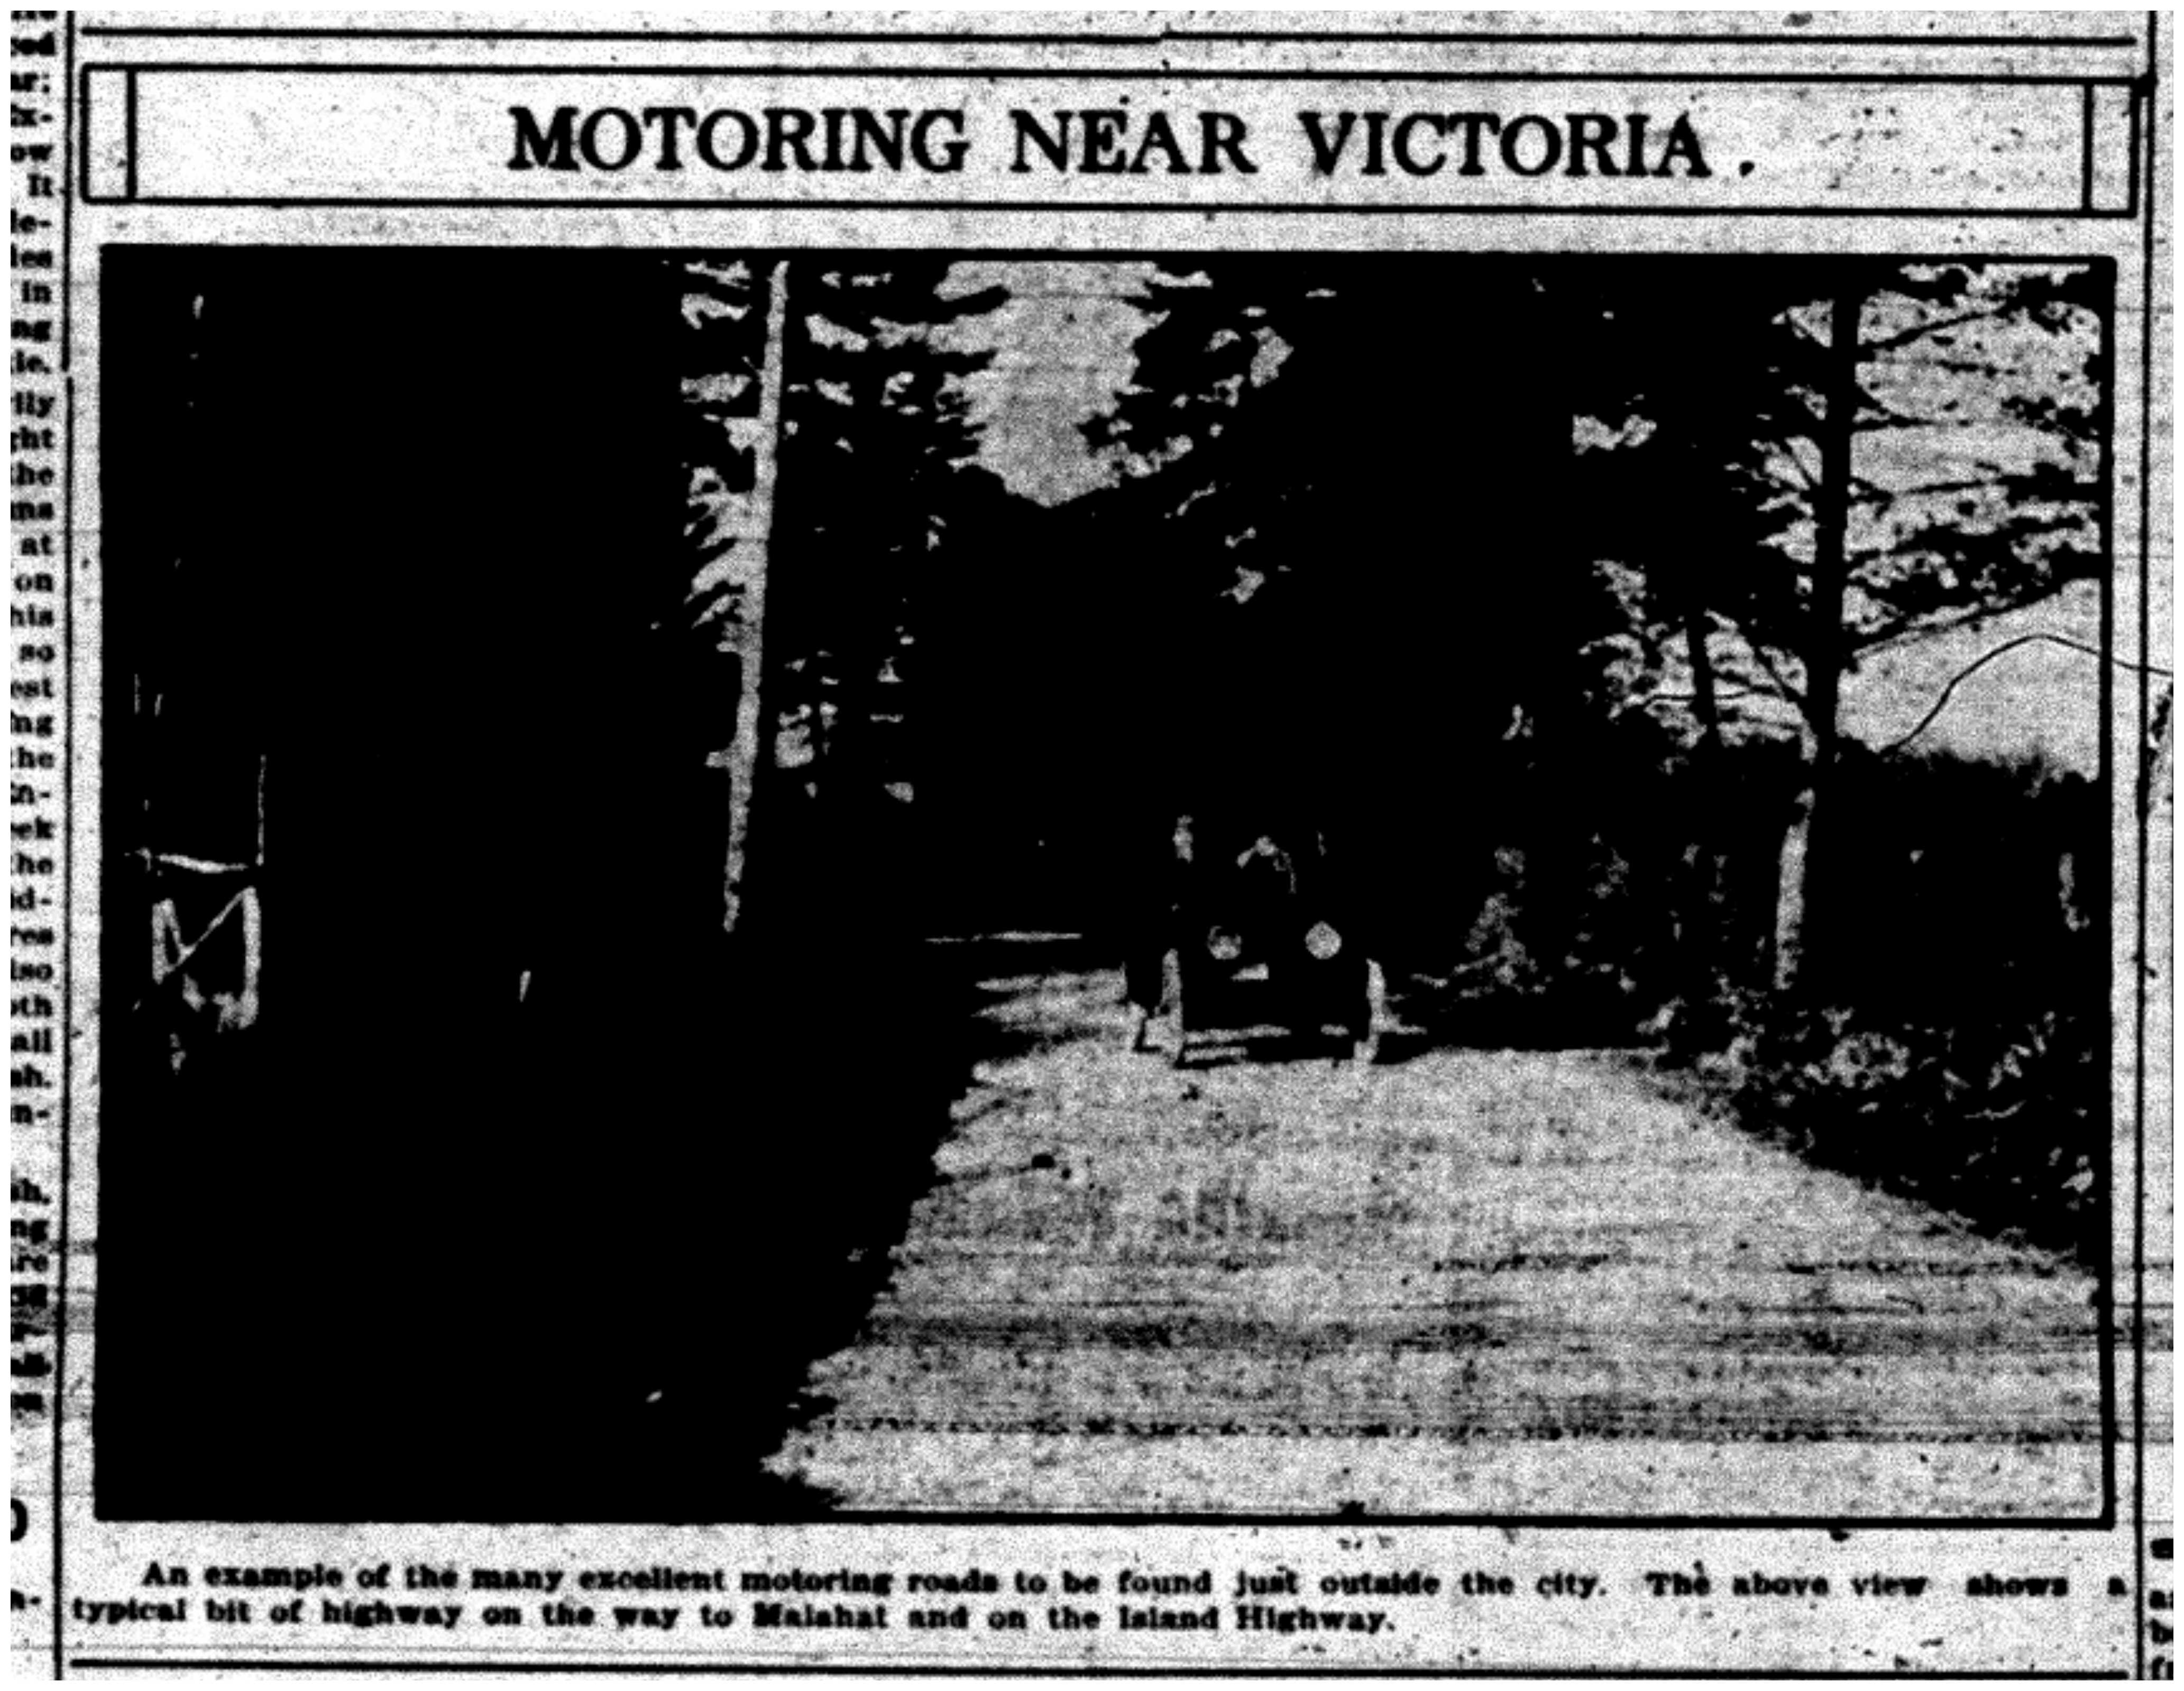 "Motoring Near Victoria"